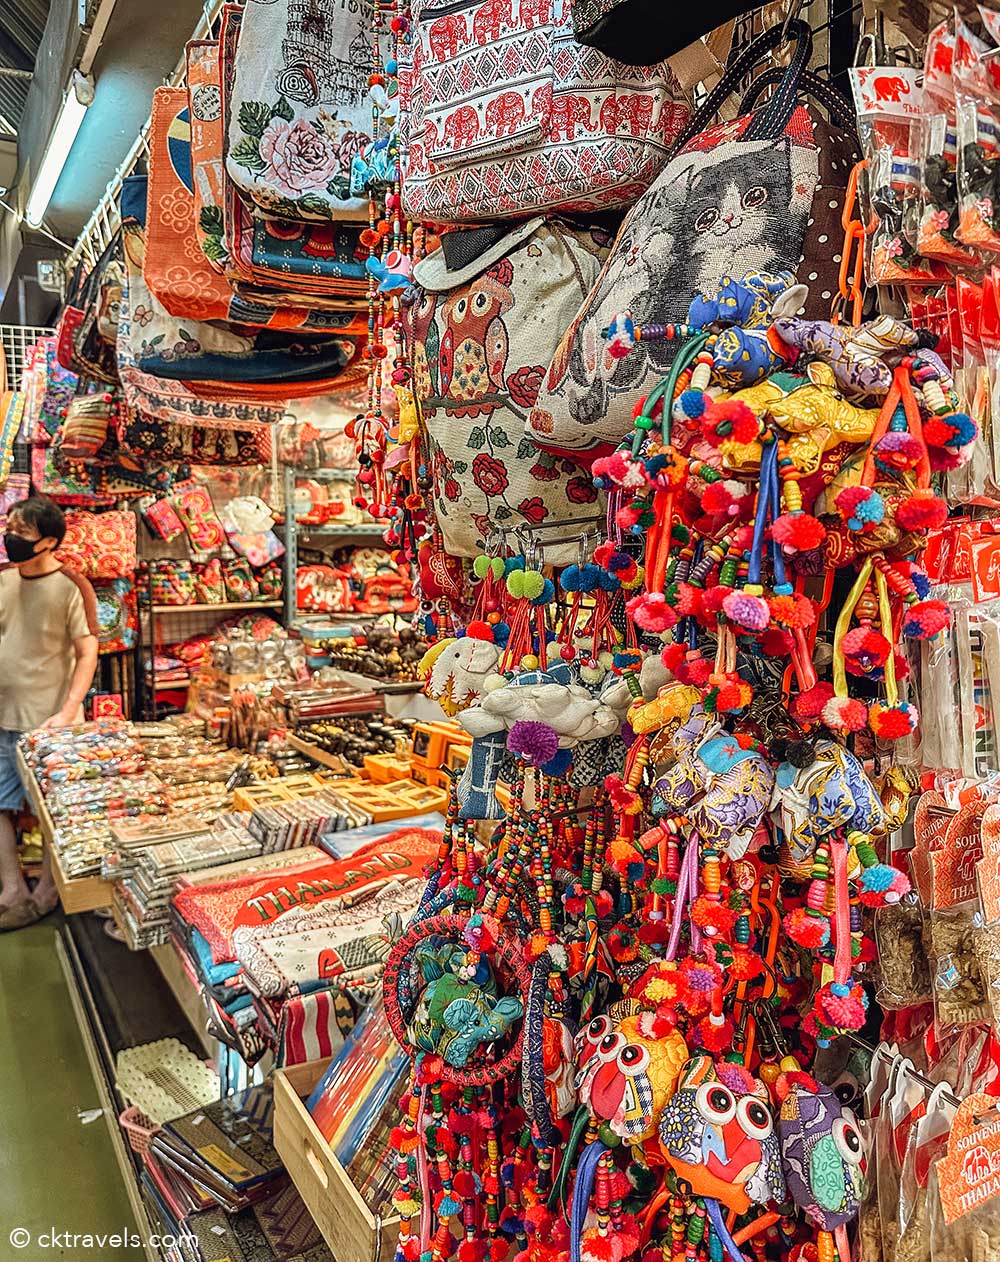 Chatuchak Weekend Market: A Super Detailed 2023 Guide